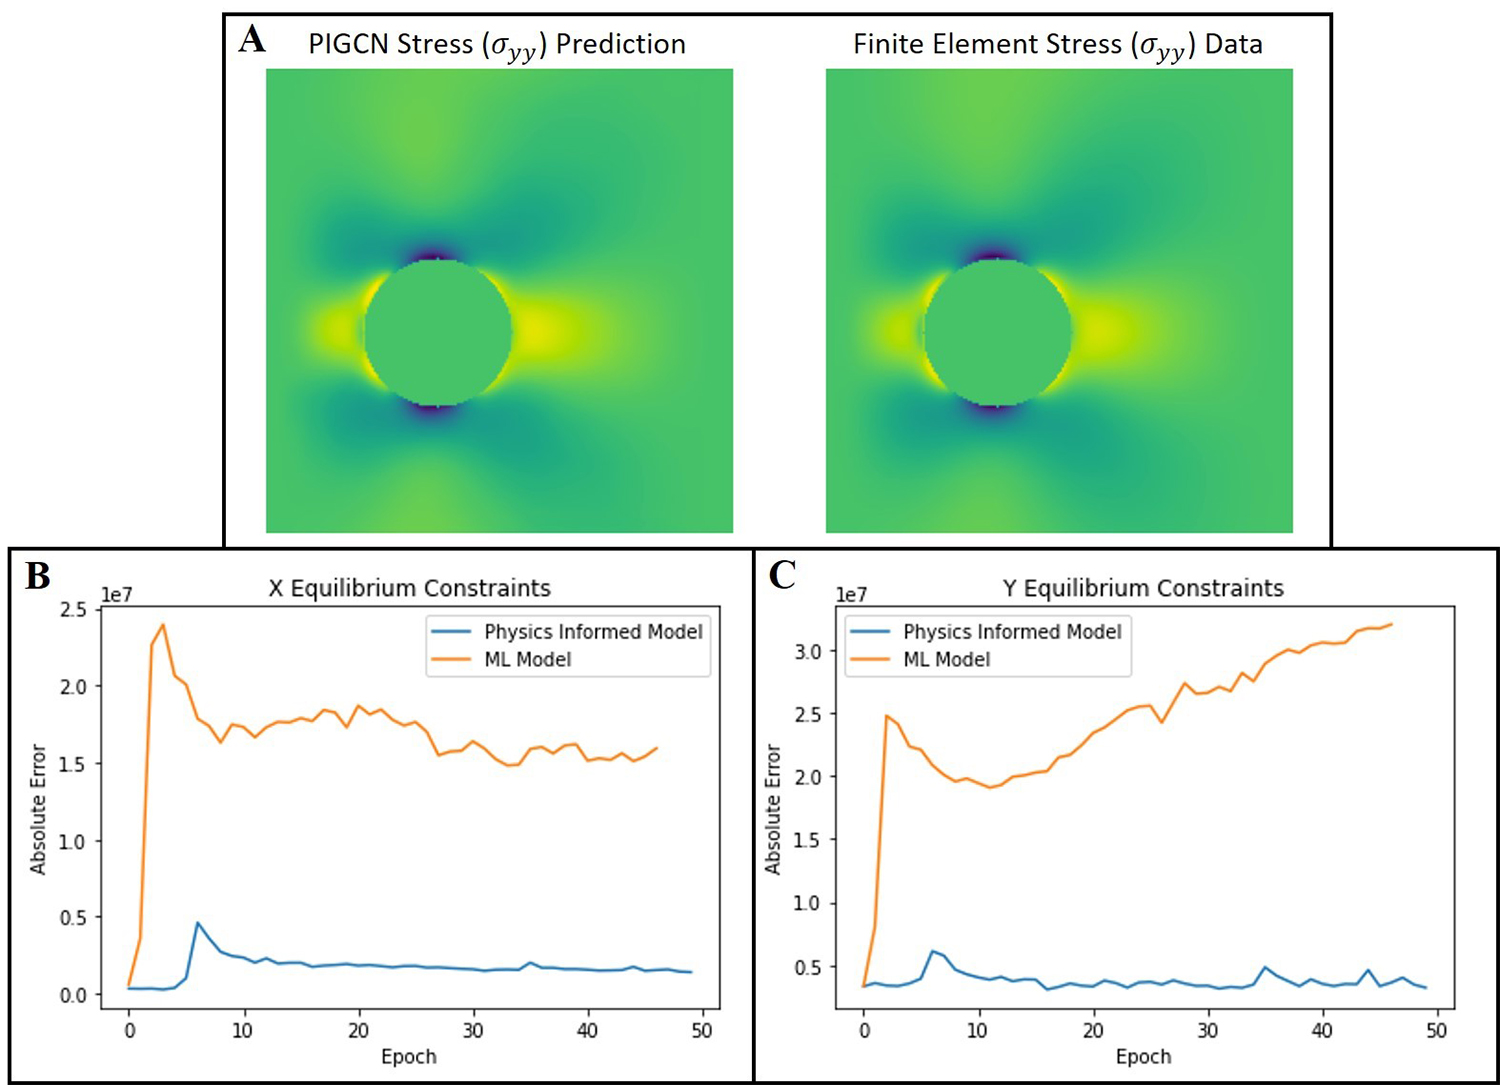 4 graphs illustrating the PIGCN predictive capability for stress